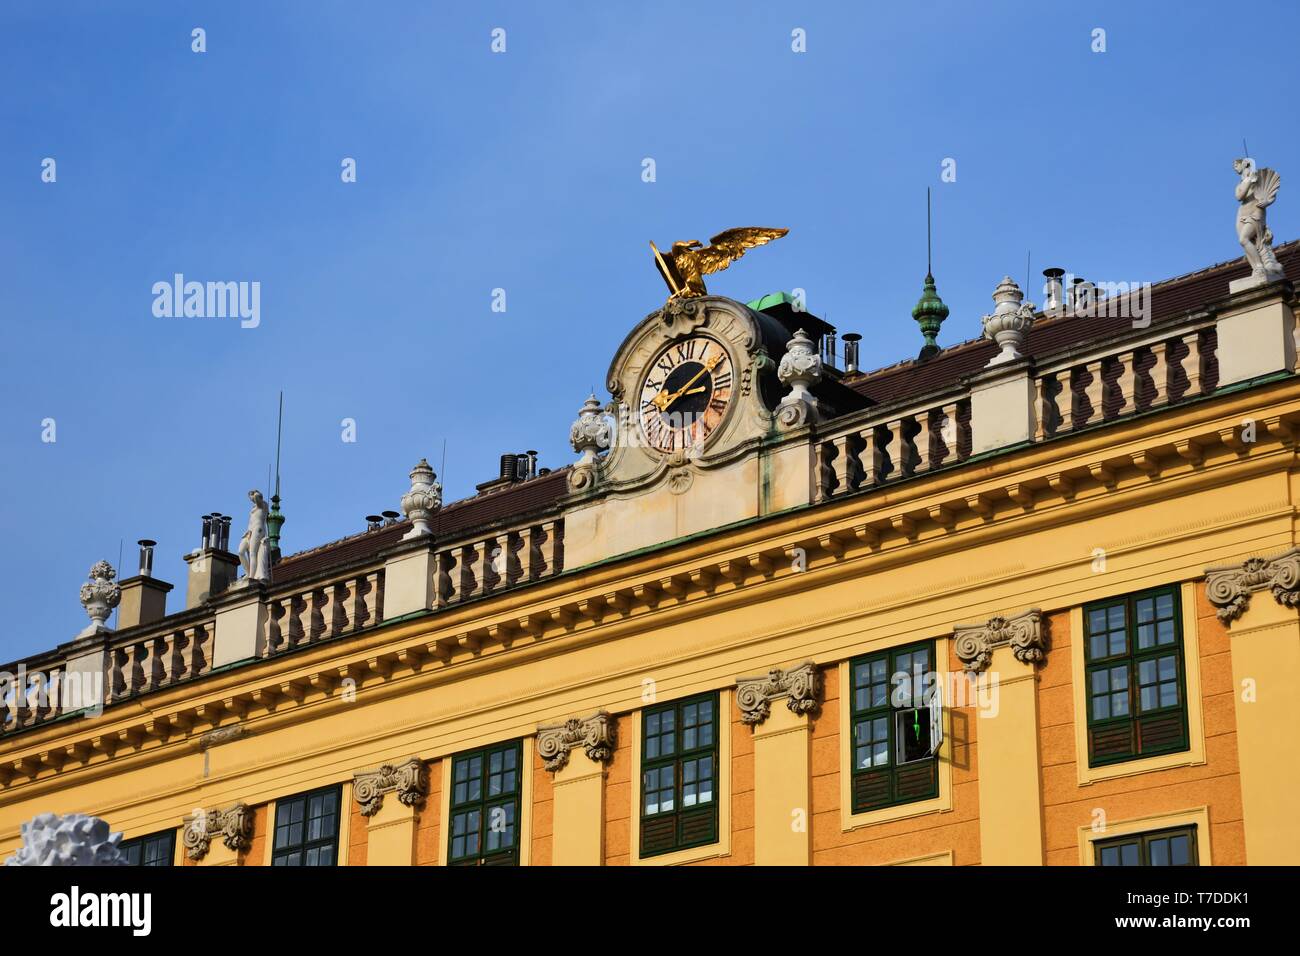 Wien, Schönbrunn, Schloss, Adler, Wappen, Gloriette, Park, Schlosspark, Kaiser, Monarchie, Donaumonarchie, K&K, Kaiser, Sissi, Franz, Josef, Thron, So Stock Photo